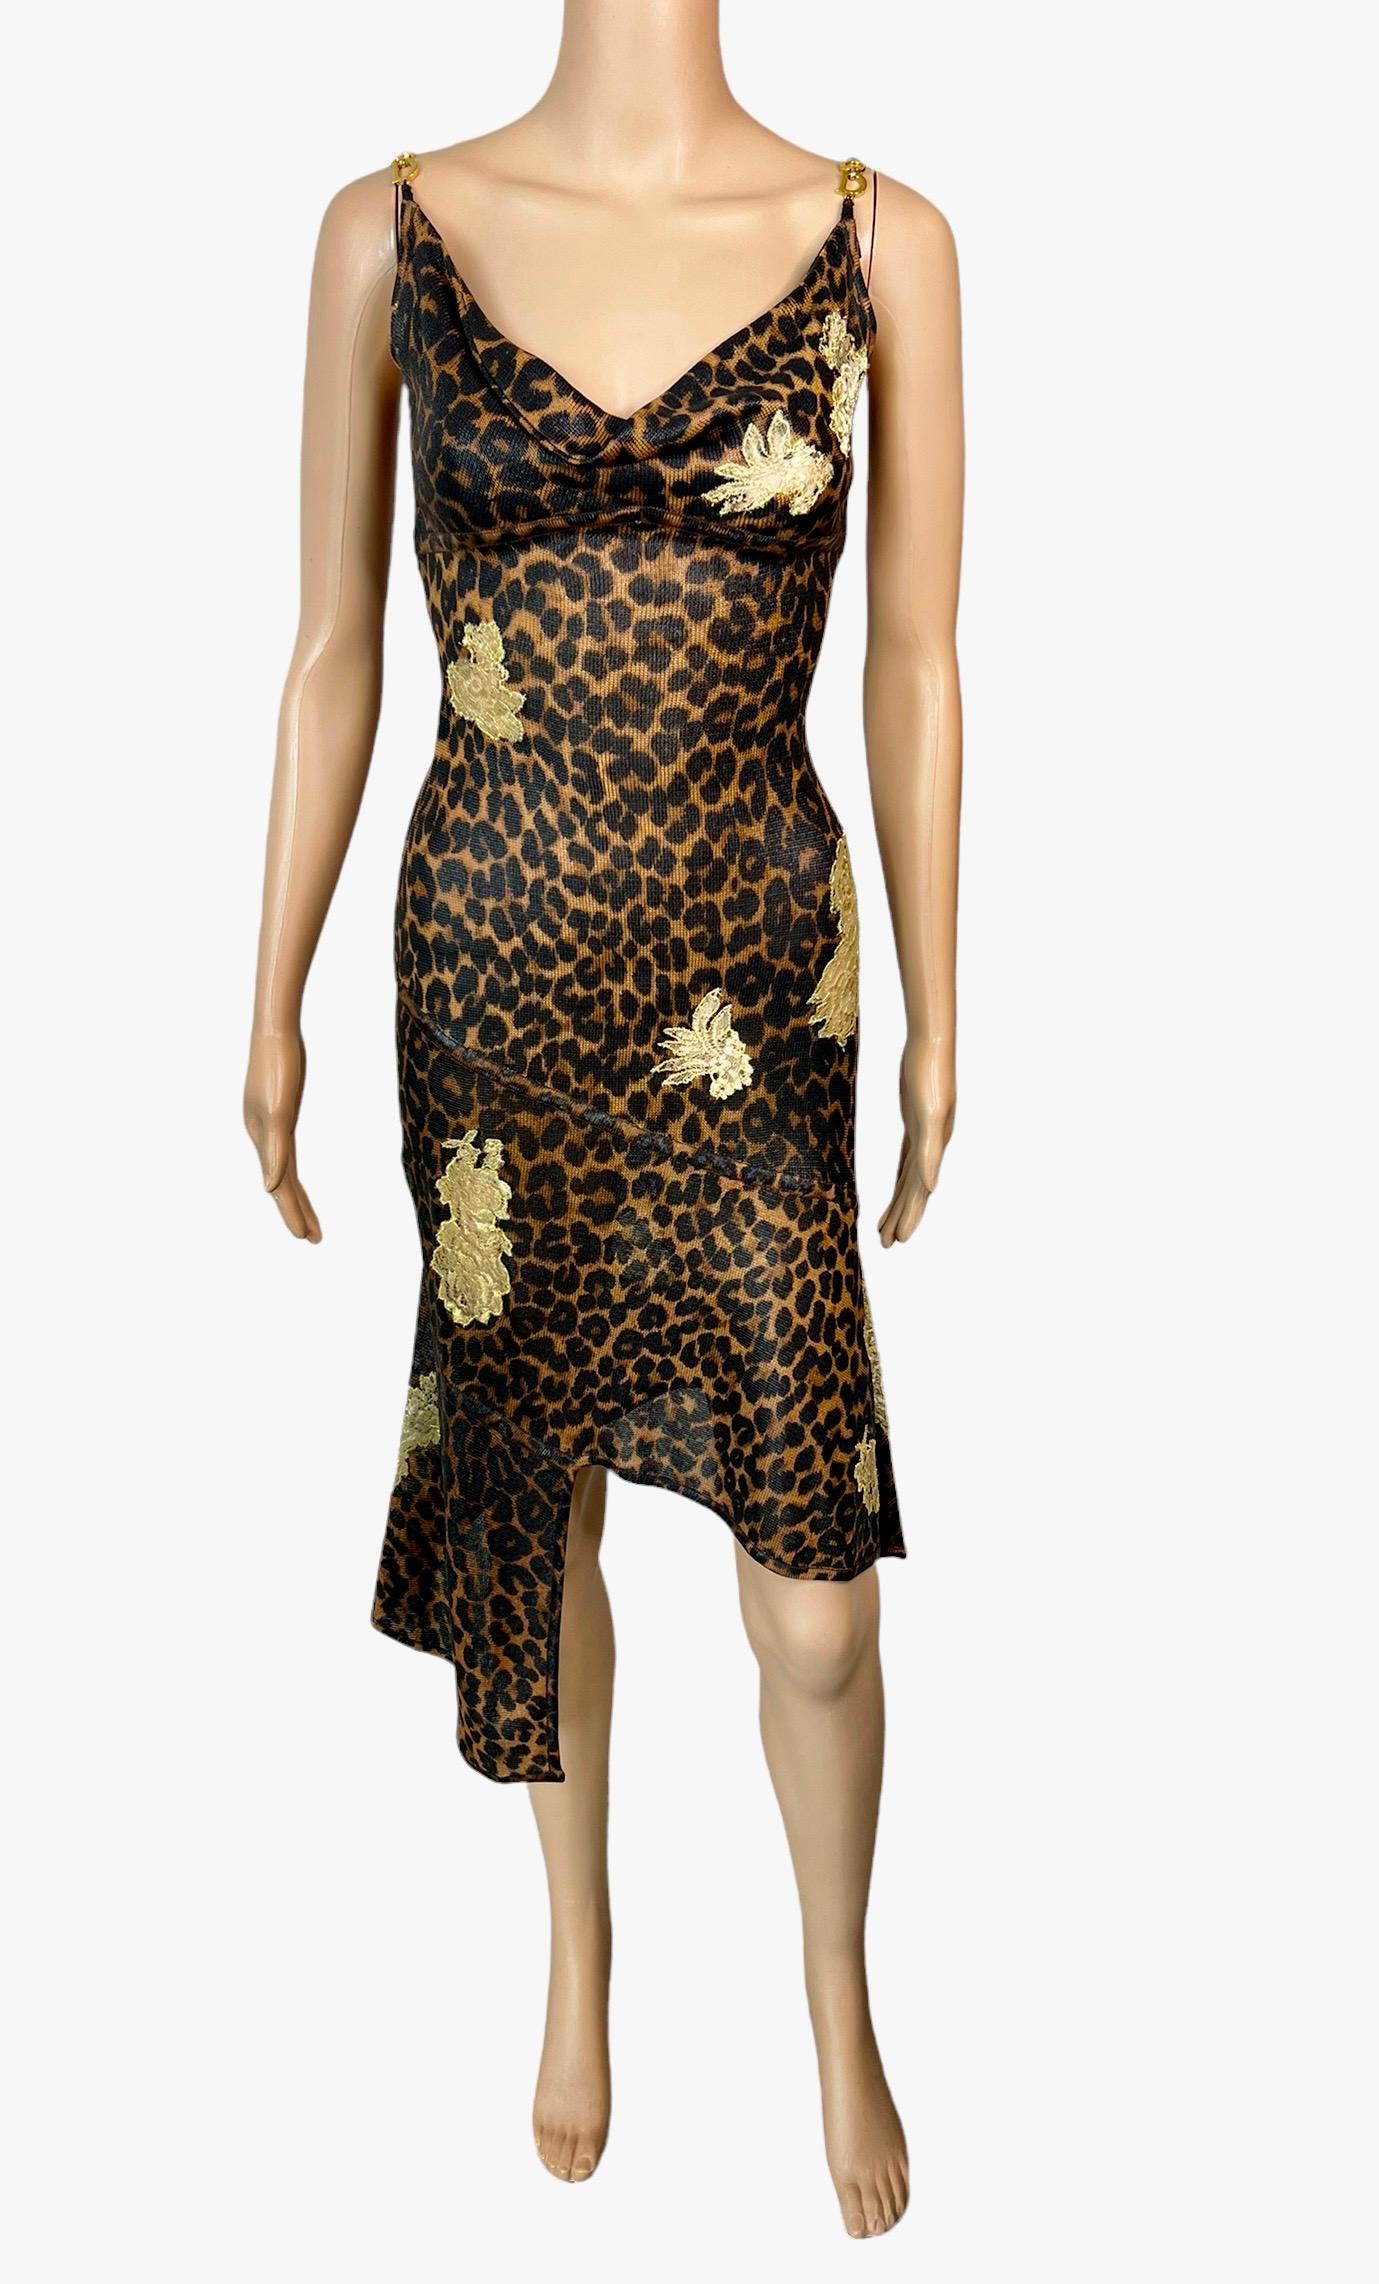 dior leopard dress